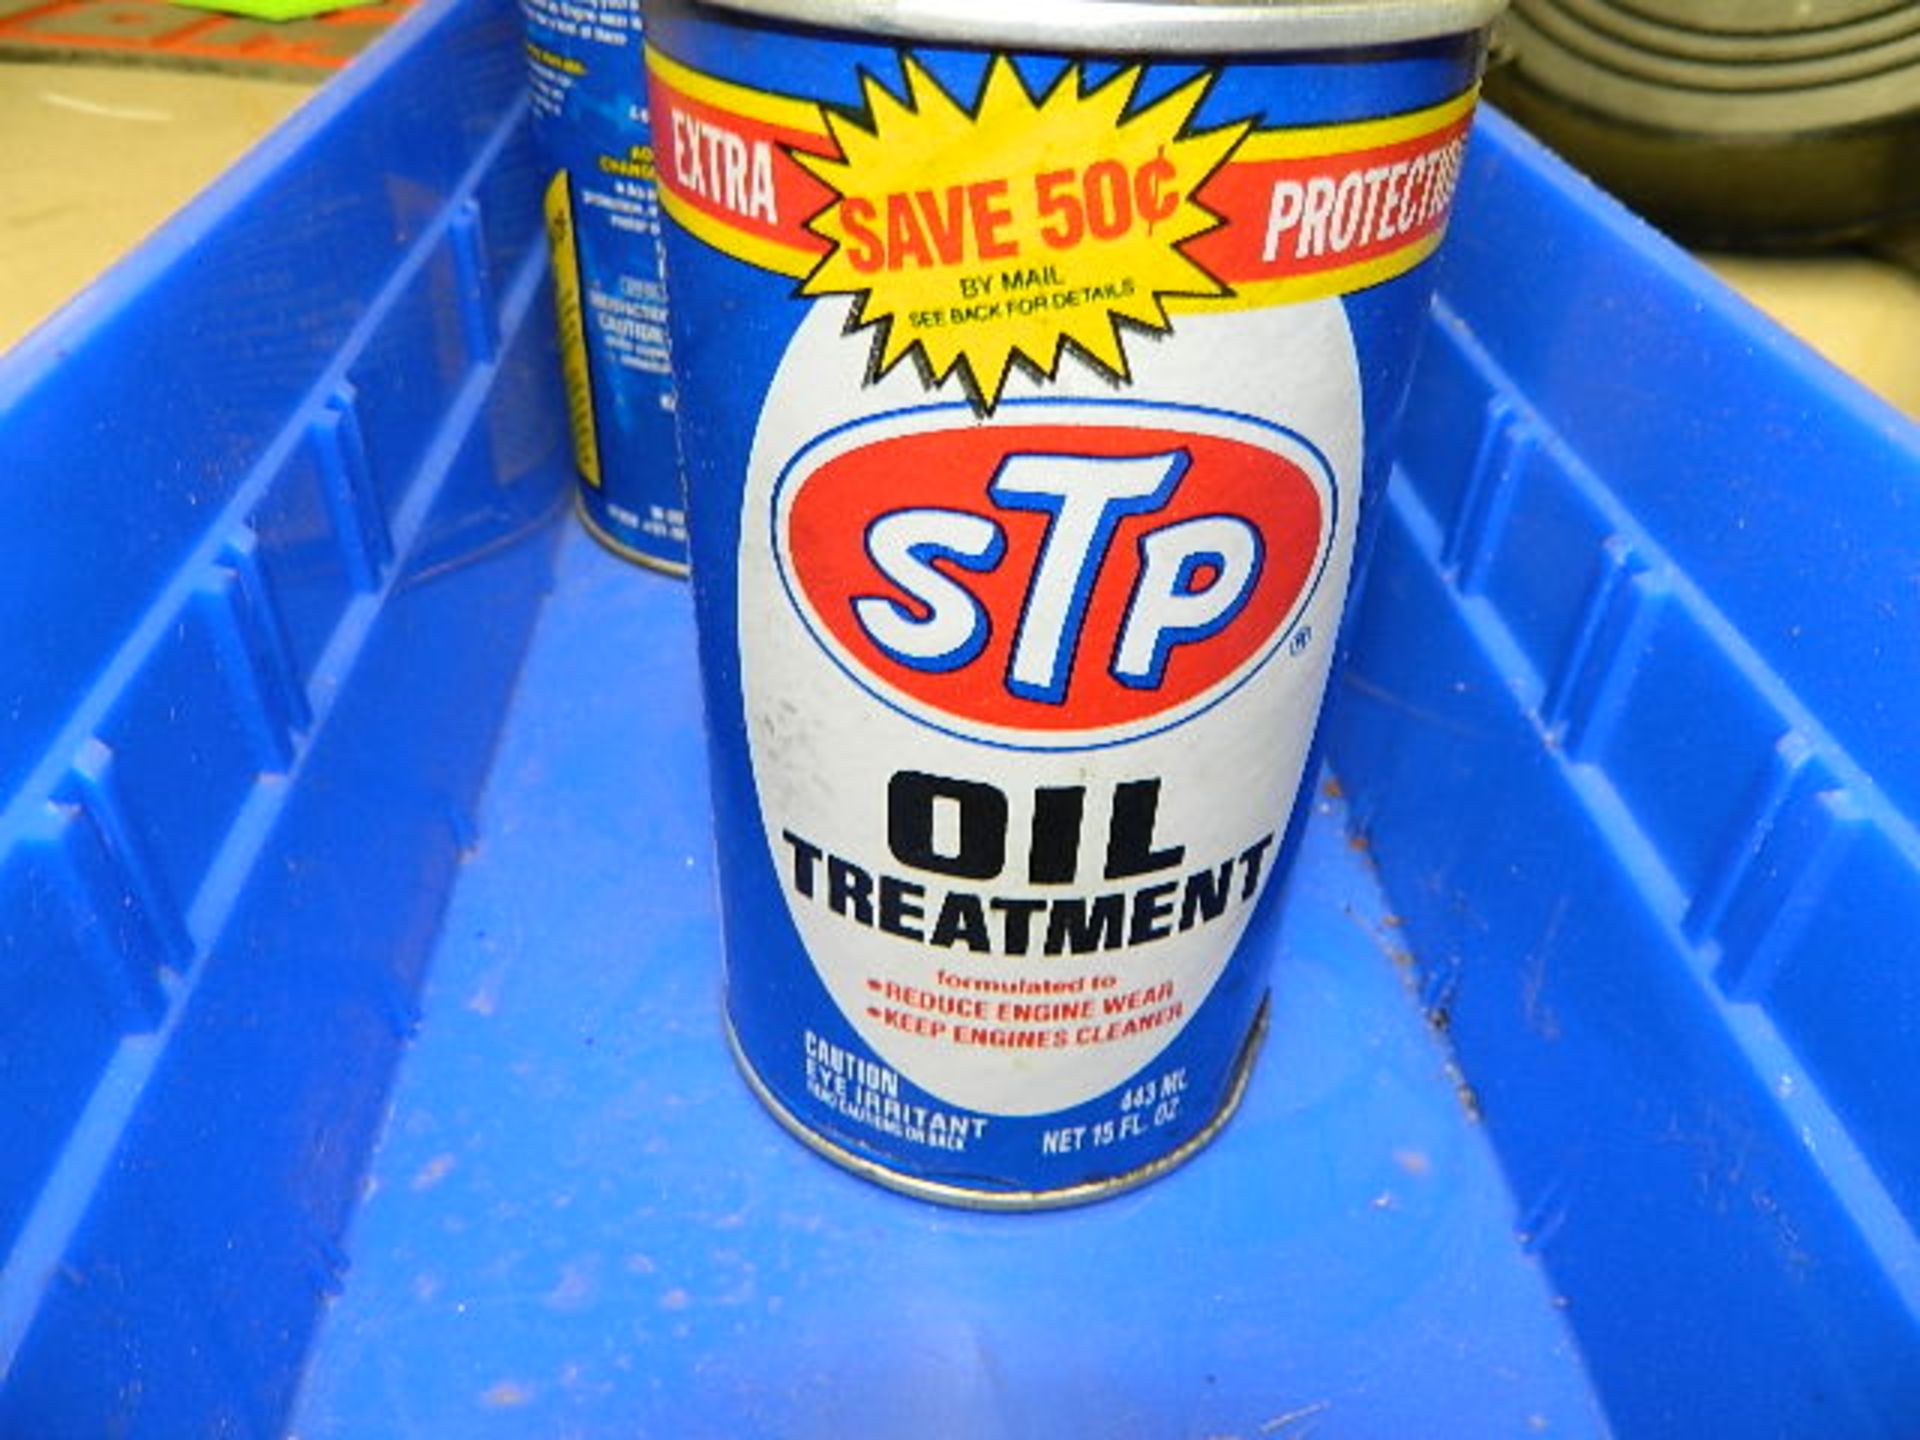 (6) S T P Oil Treatment Cans w/ Contents